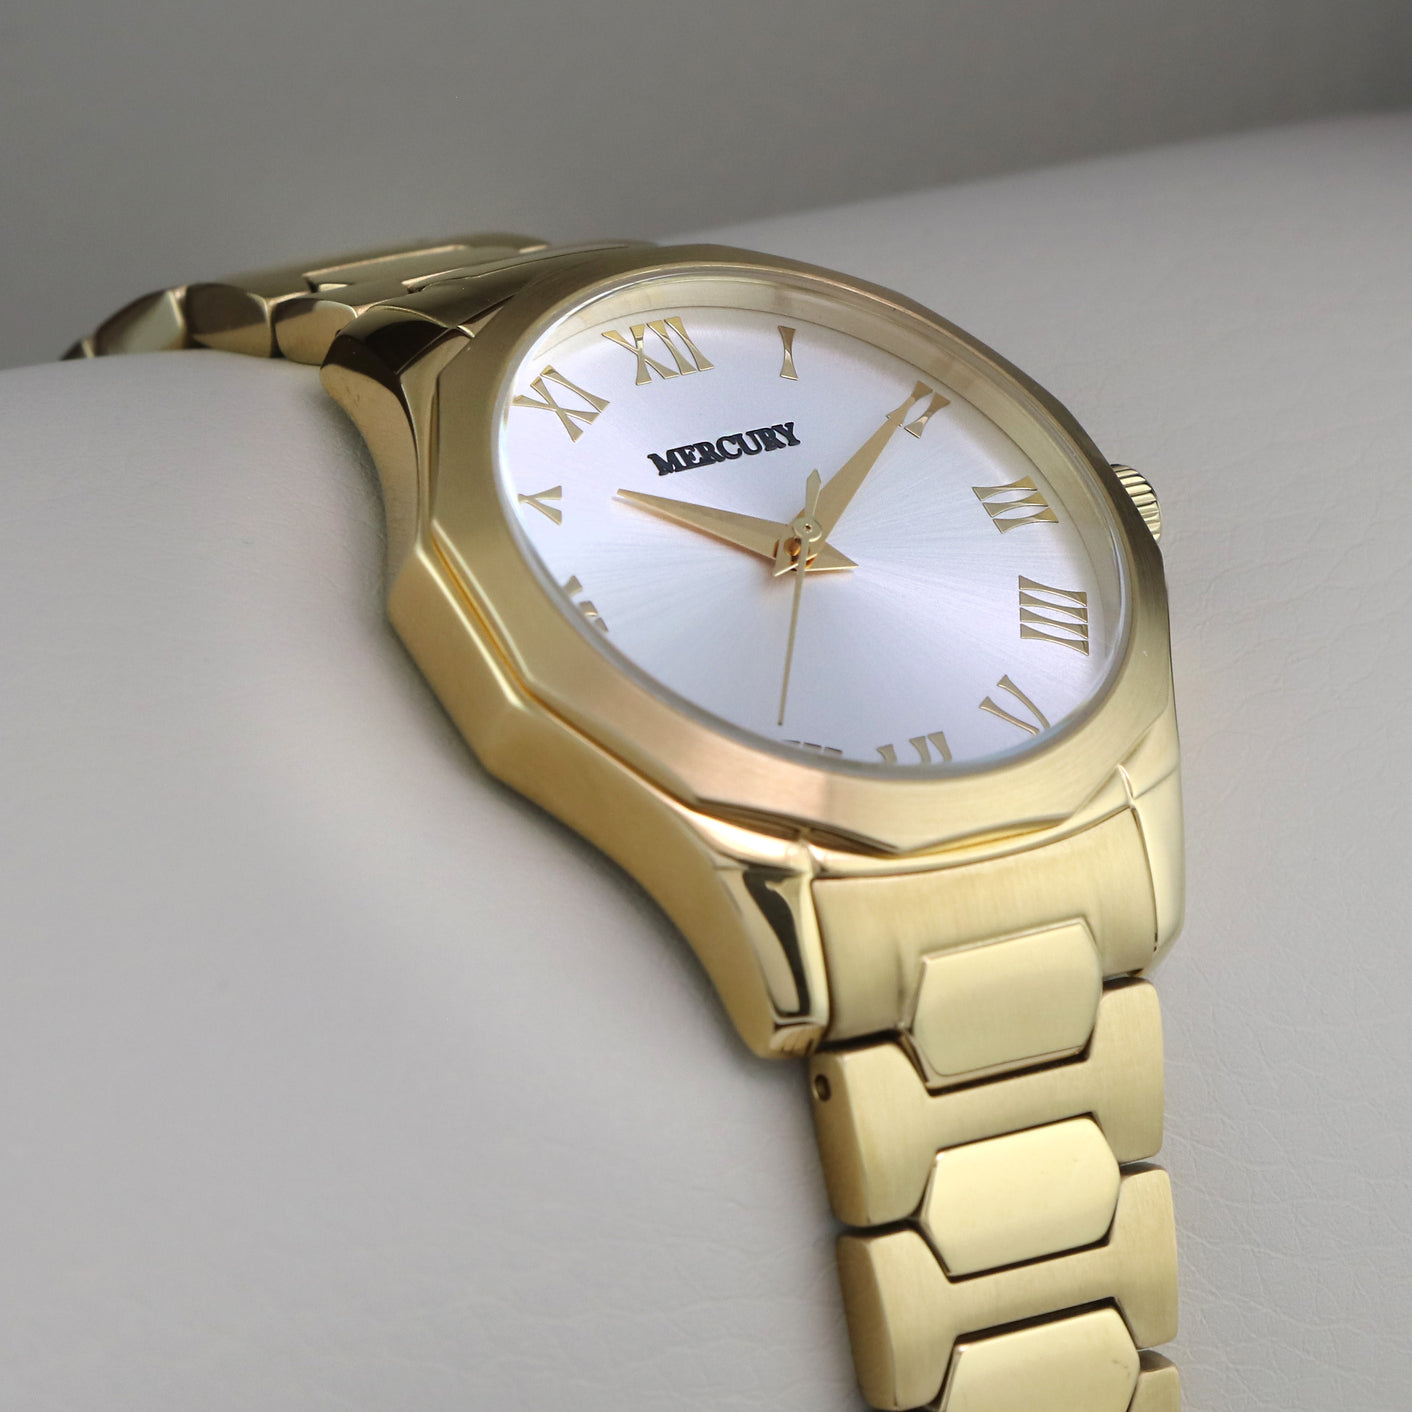 Mercury Women's Swiss Quartz Watch with White Dial - MER-0015